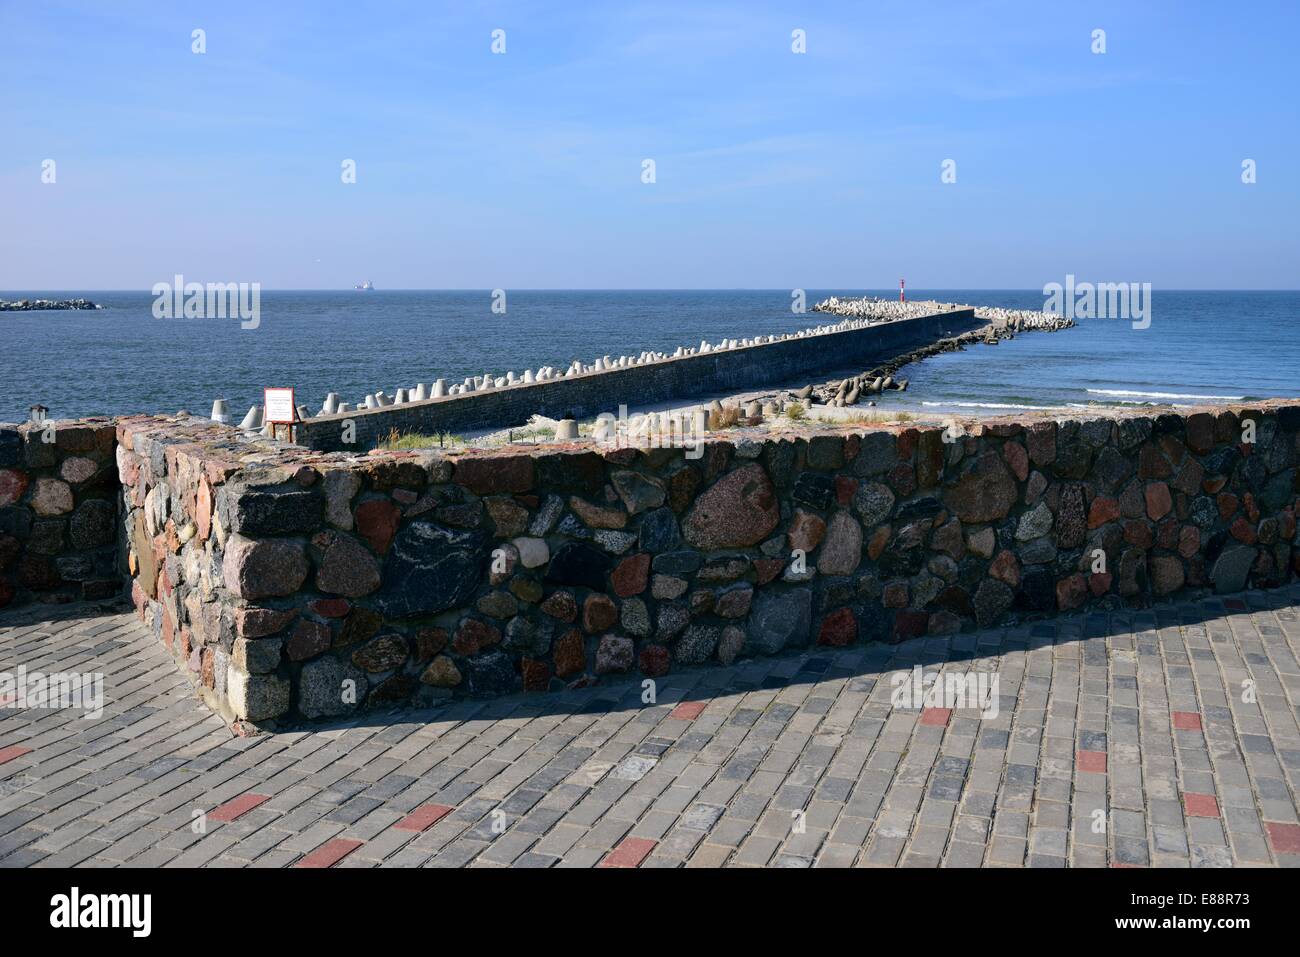 Mar baltico, frangionde in Baltiysk. La Russia Foto Stock